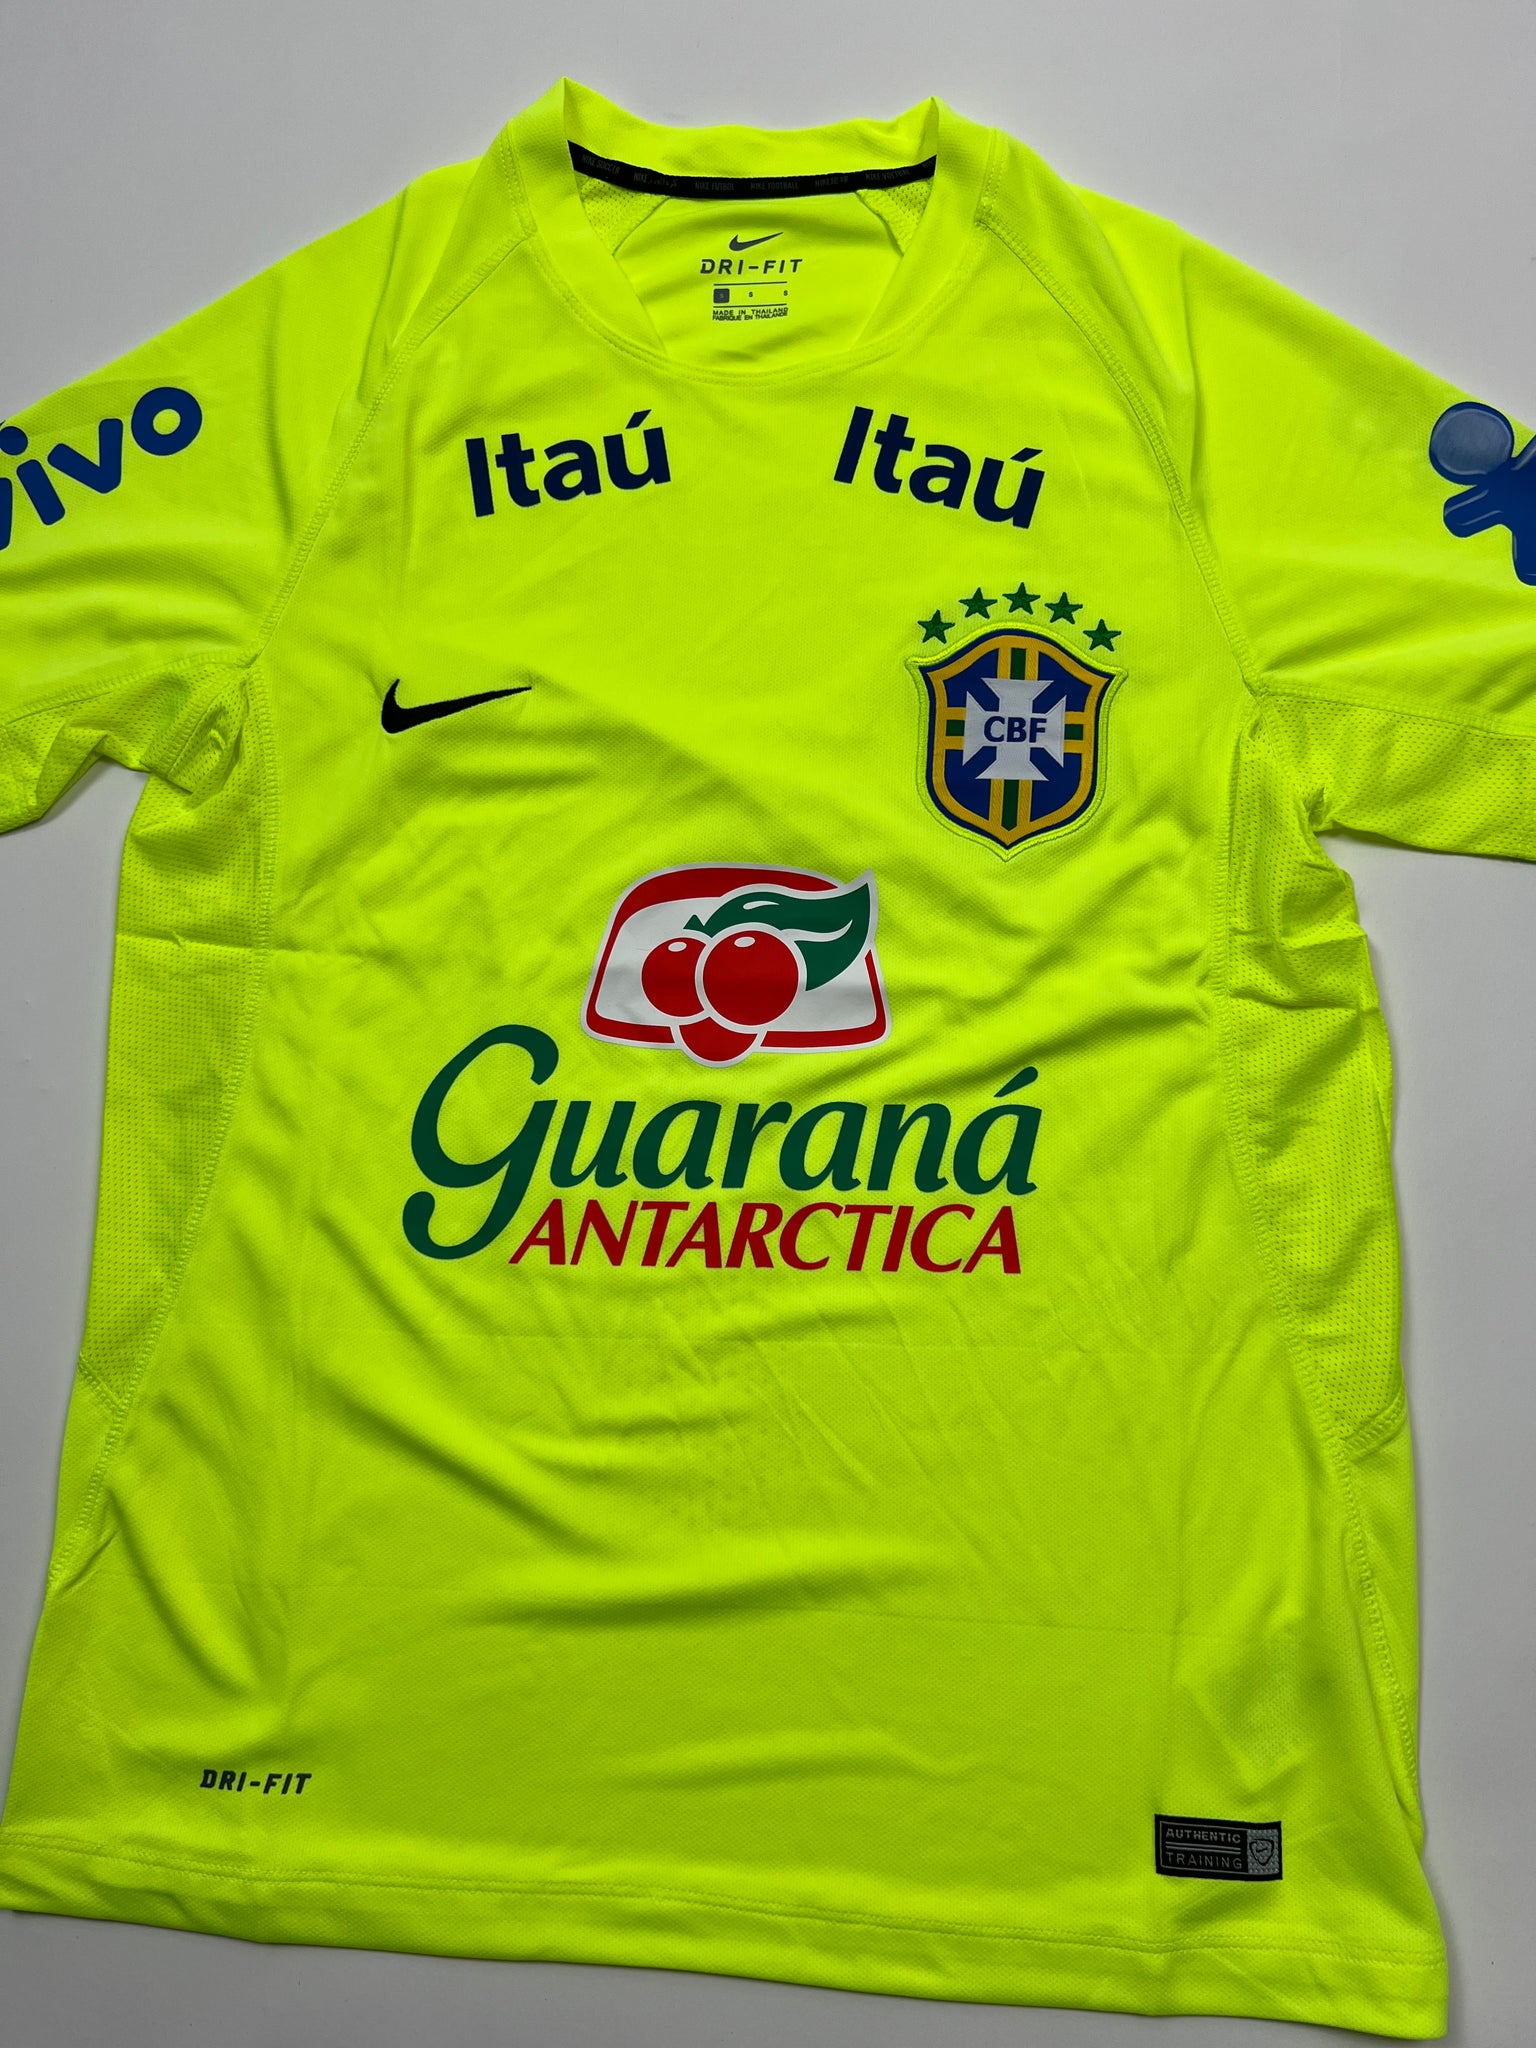 Nike Brazil Jersey (S)